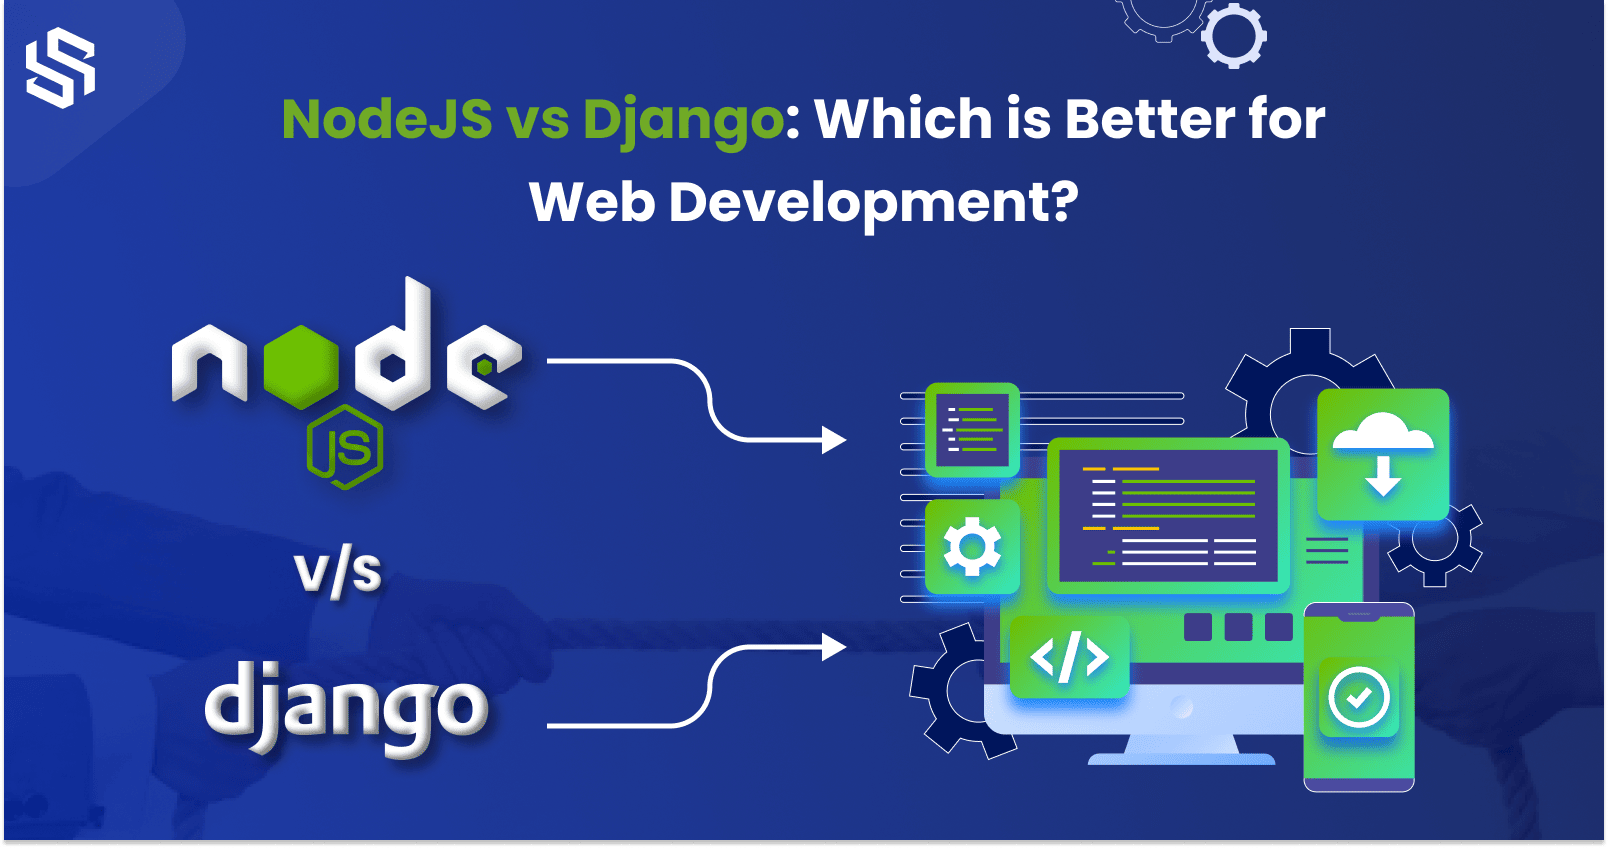 NodeJS vs Django - Which is Better for Web Development